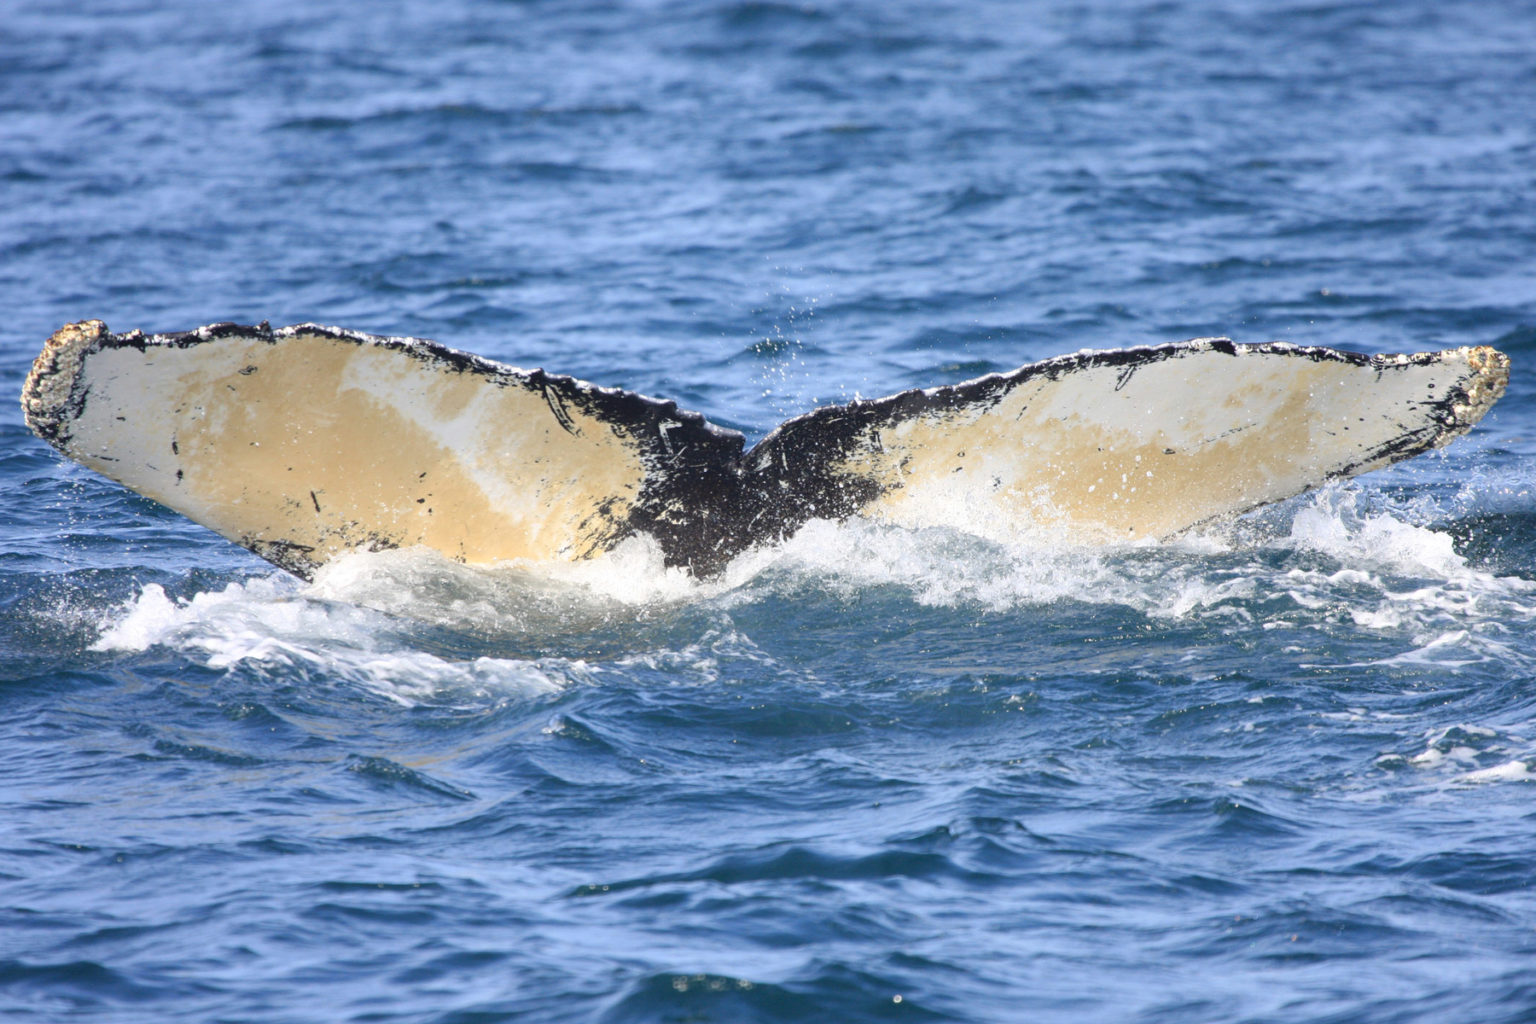 Humpback whale tail. Photo by Jeremy Winn